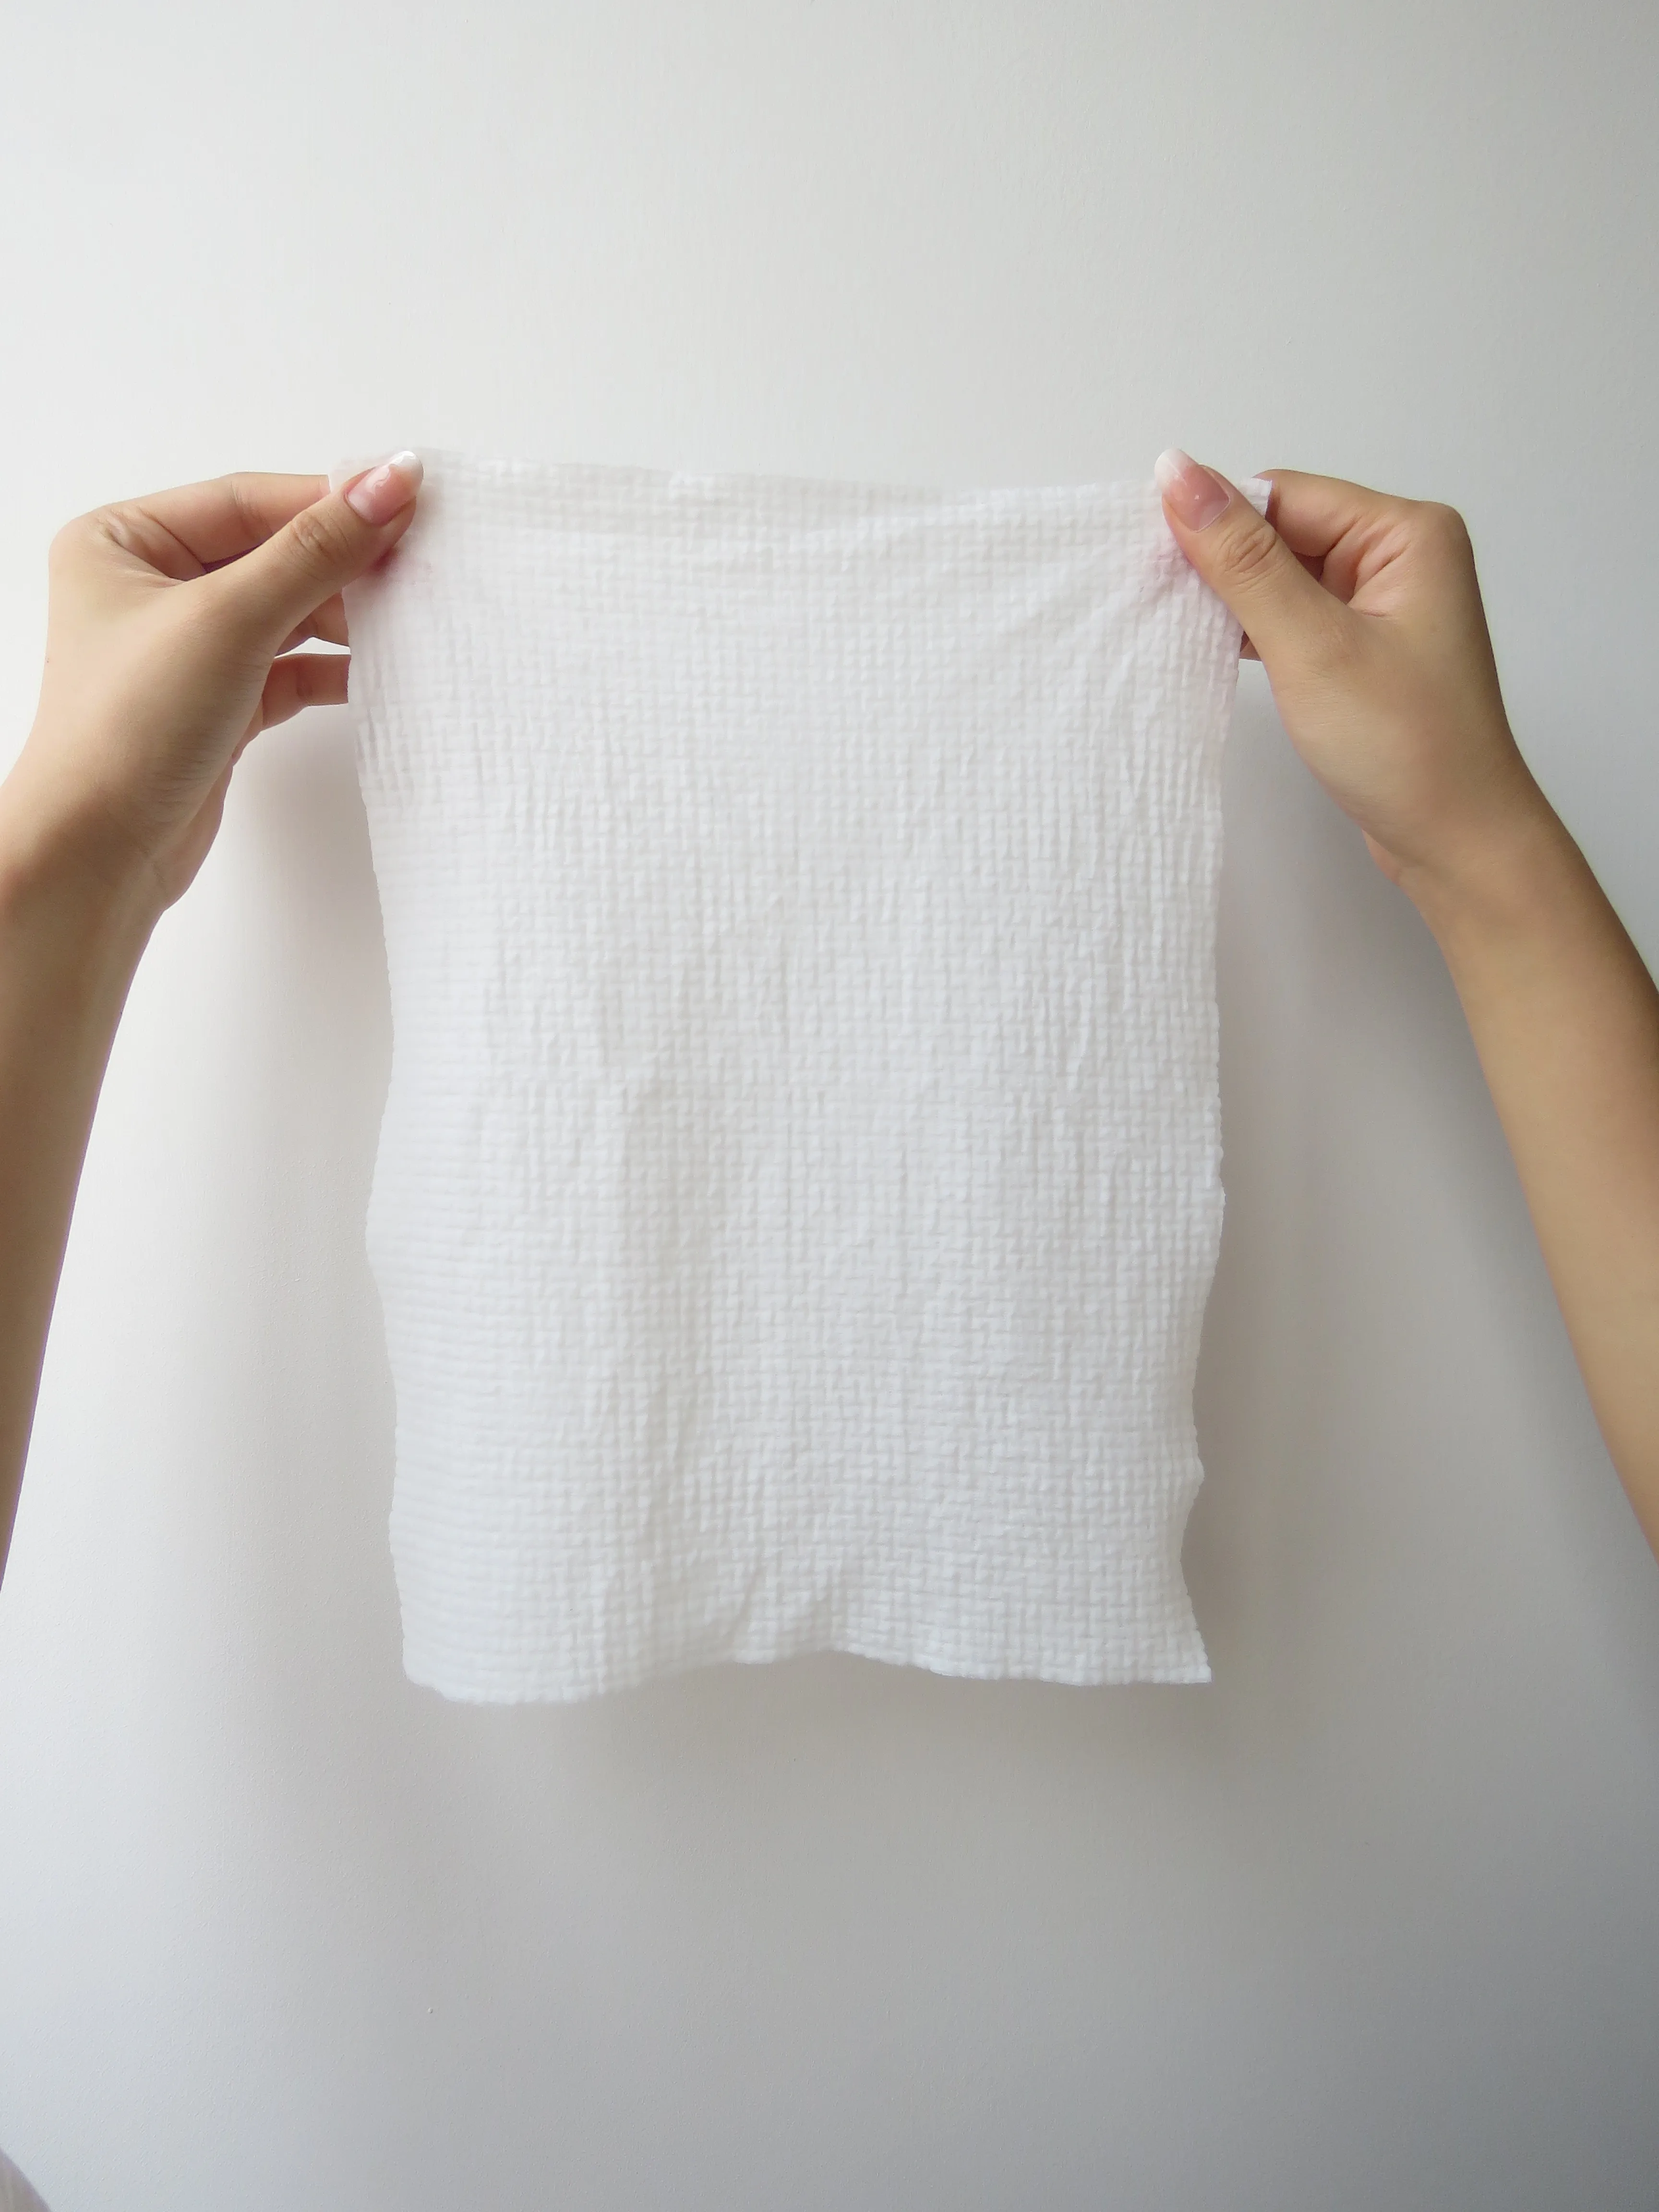 100% pure cotton fabric  disposable compressed facial tissue magic towel